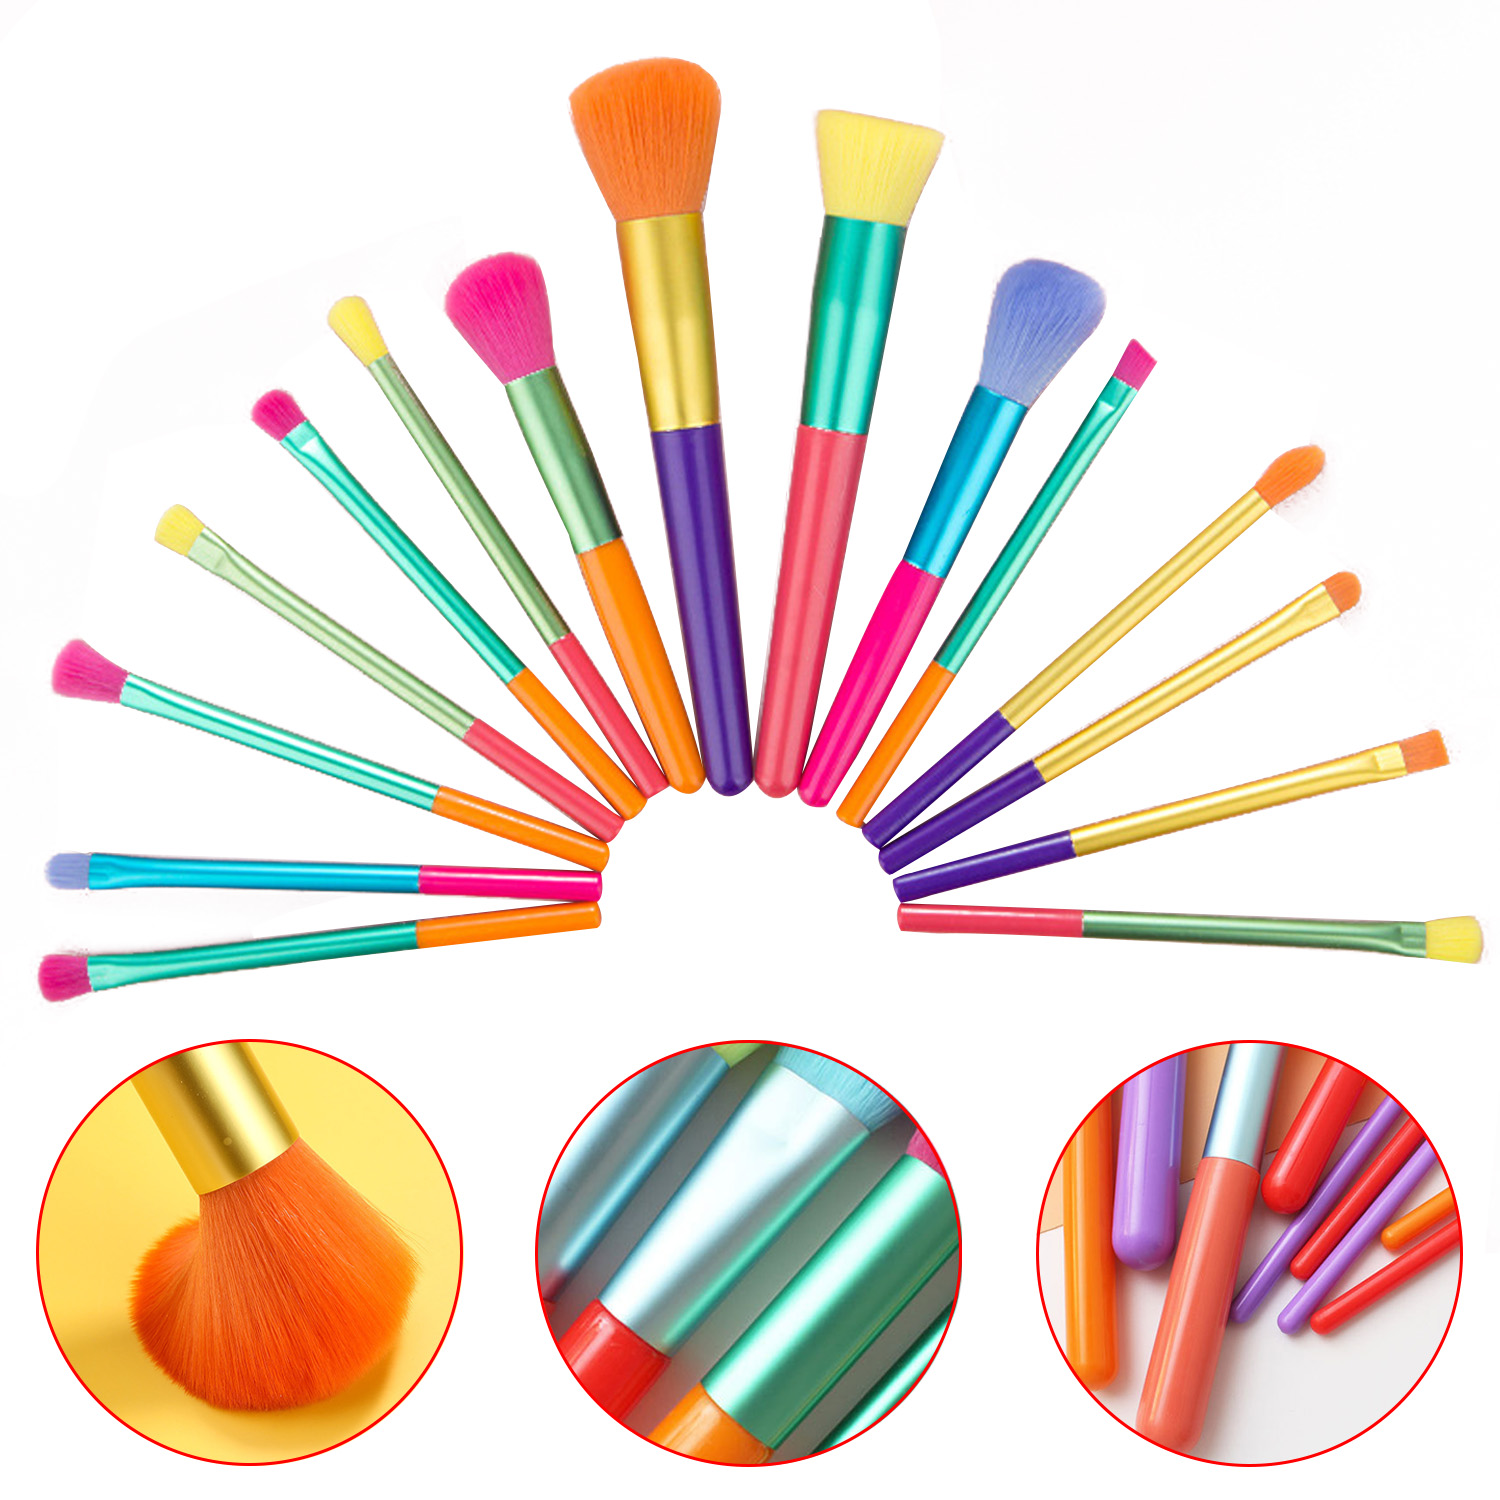 15 Pcs Makeup Brushes Full Set of Color Portable Beauty Makeup Tools Set